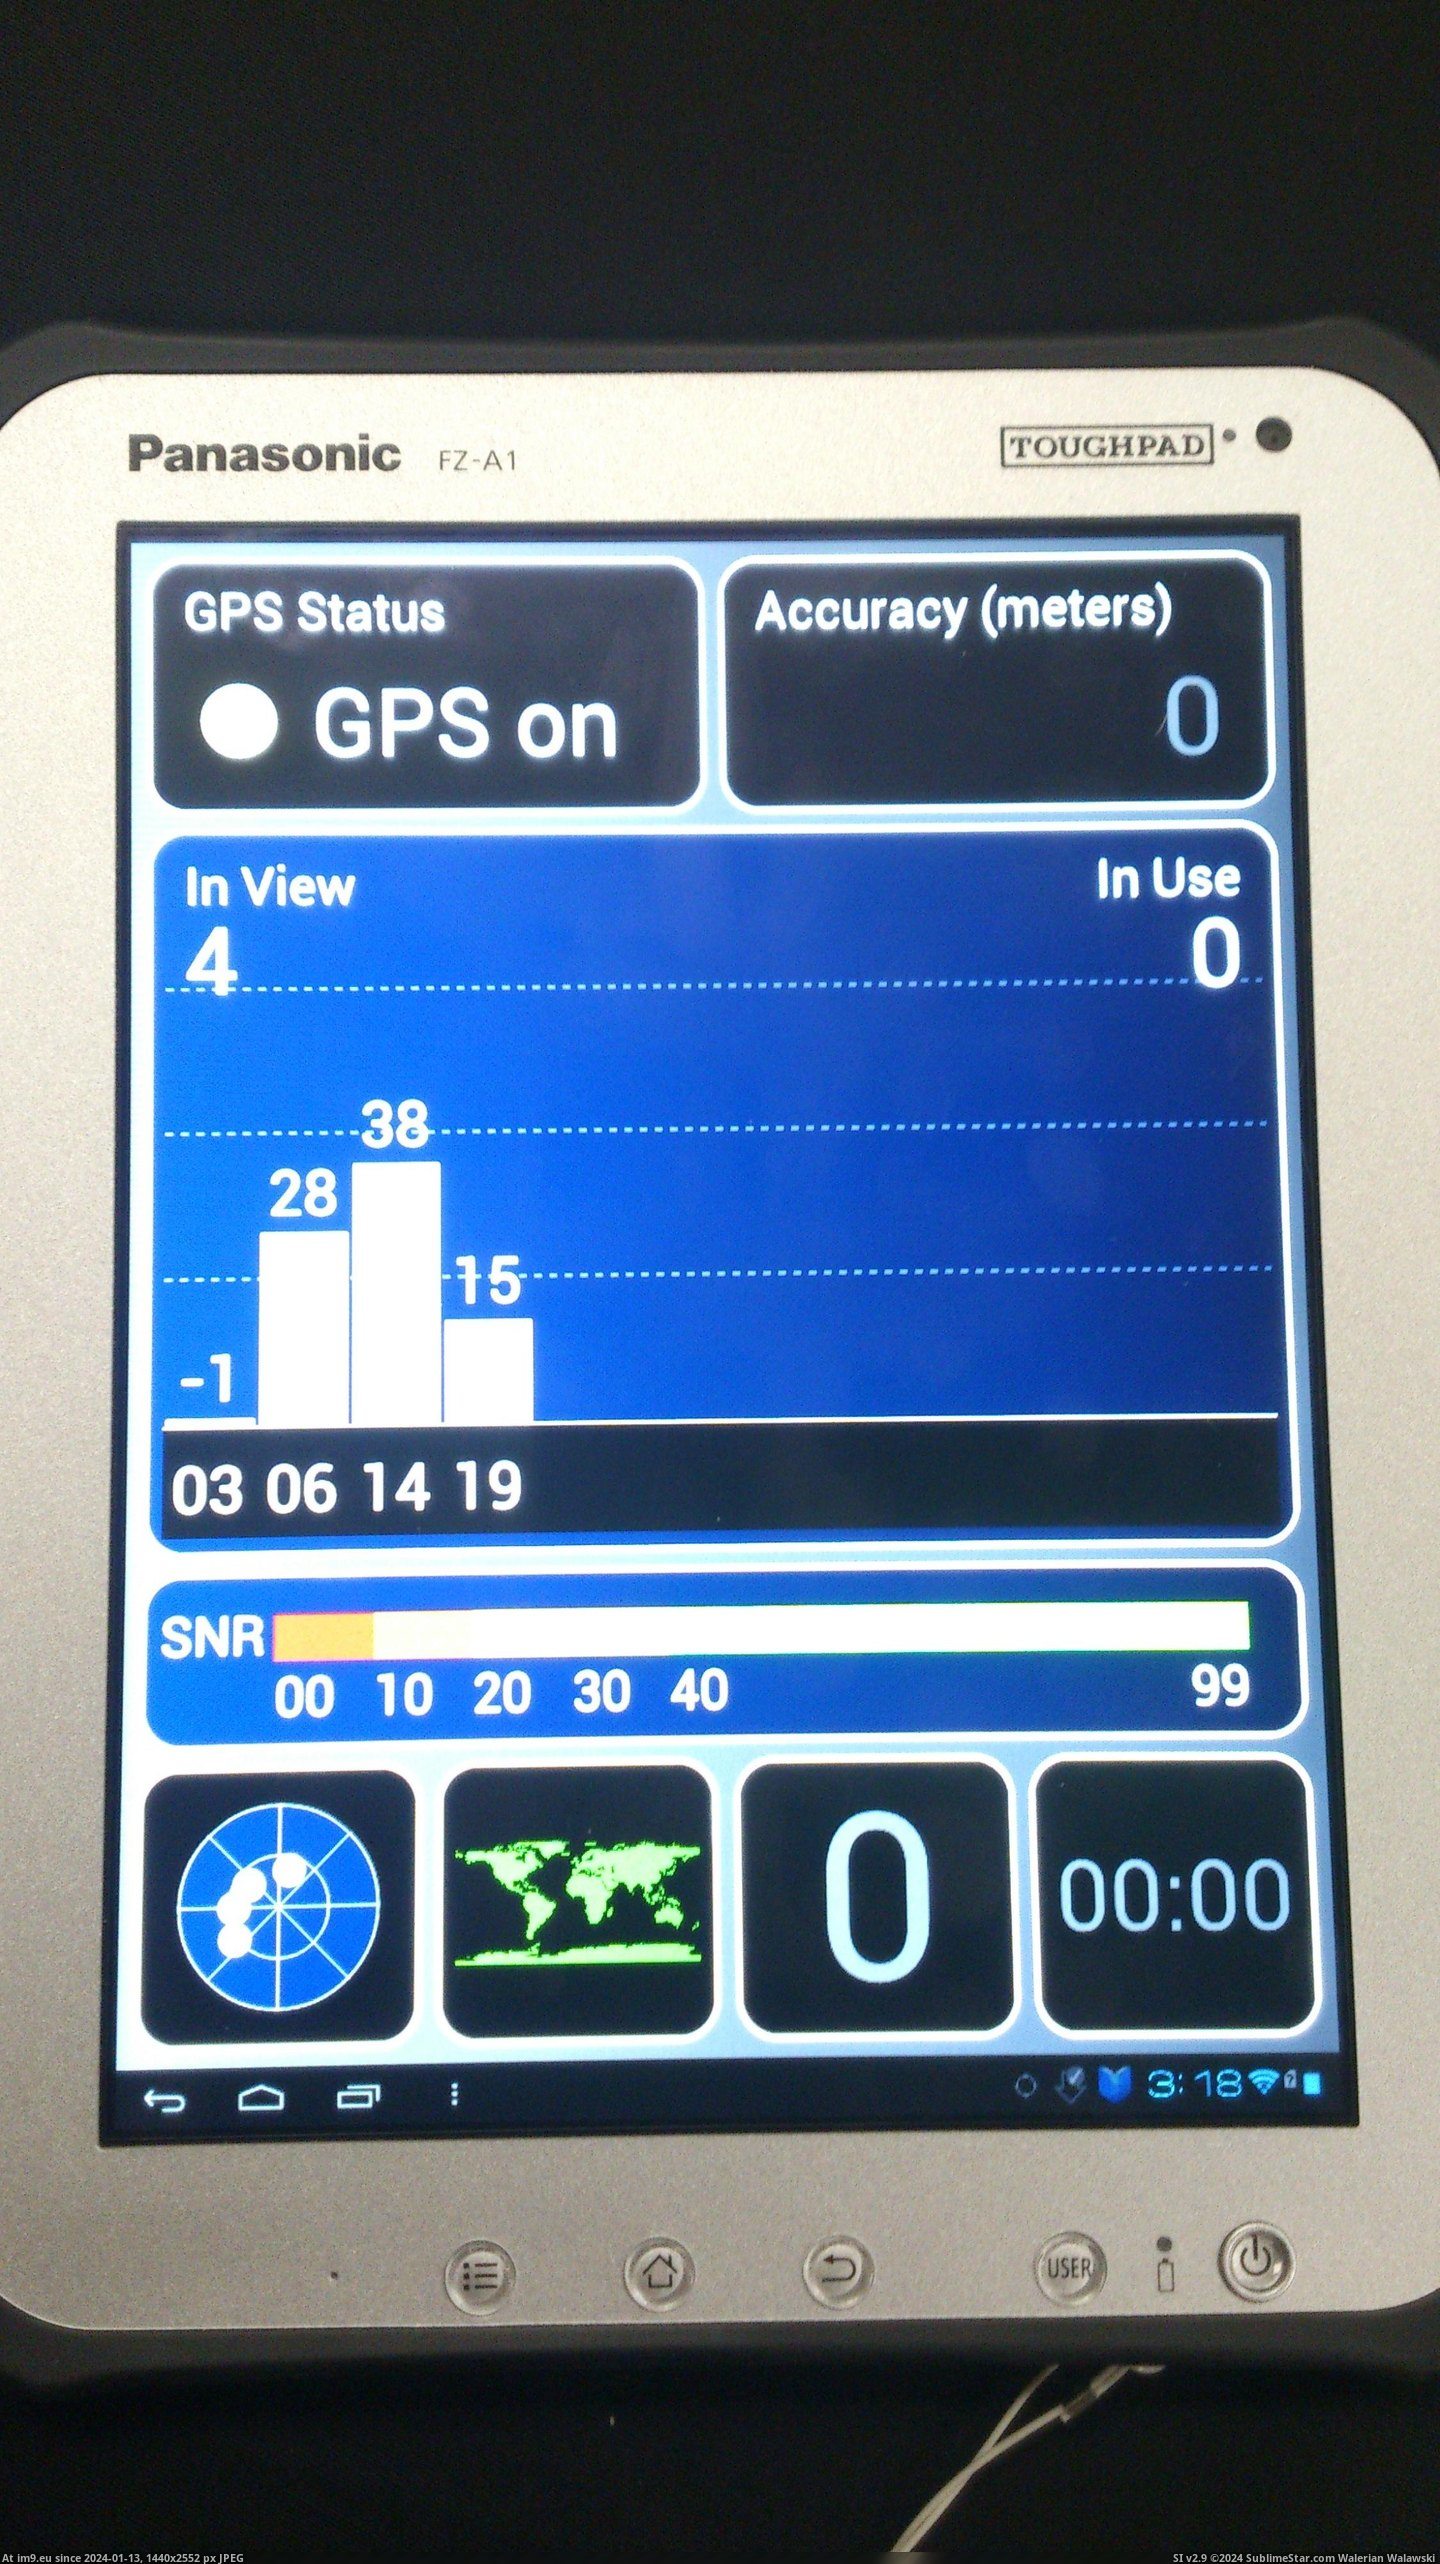 #Test #Indoors #Gps #App Indoors A1 - GPS Test App Pic. (Bild von album Ocean View))